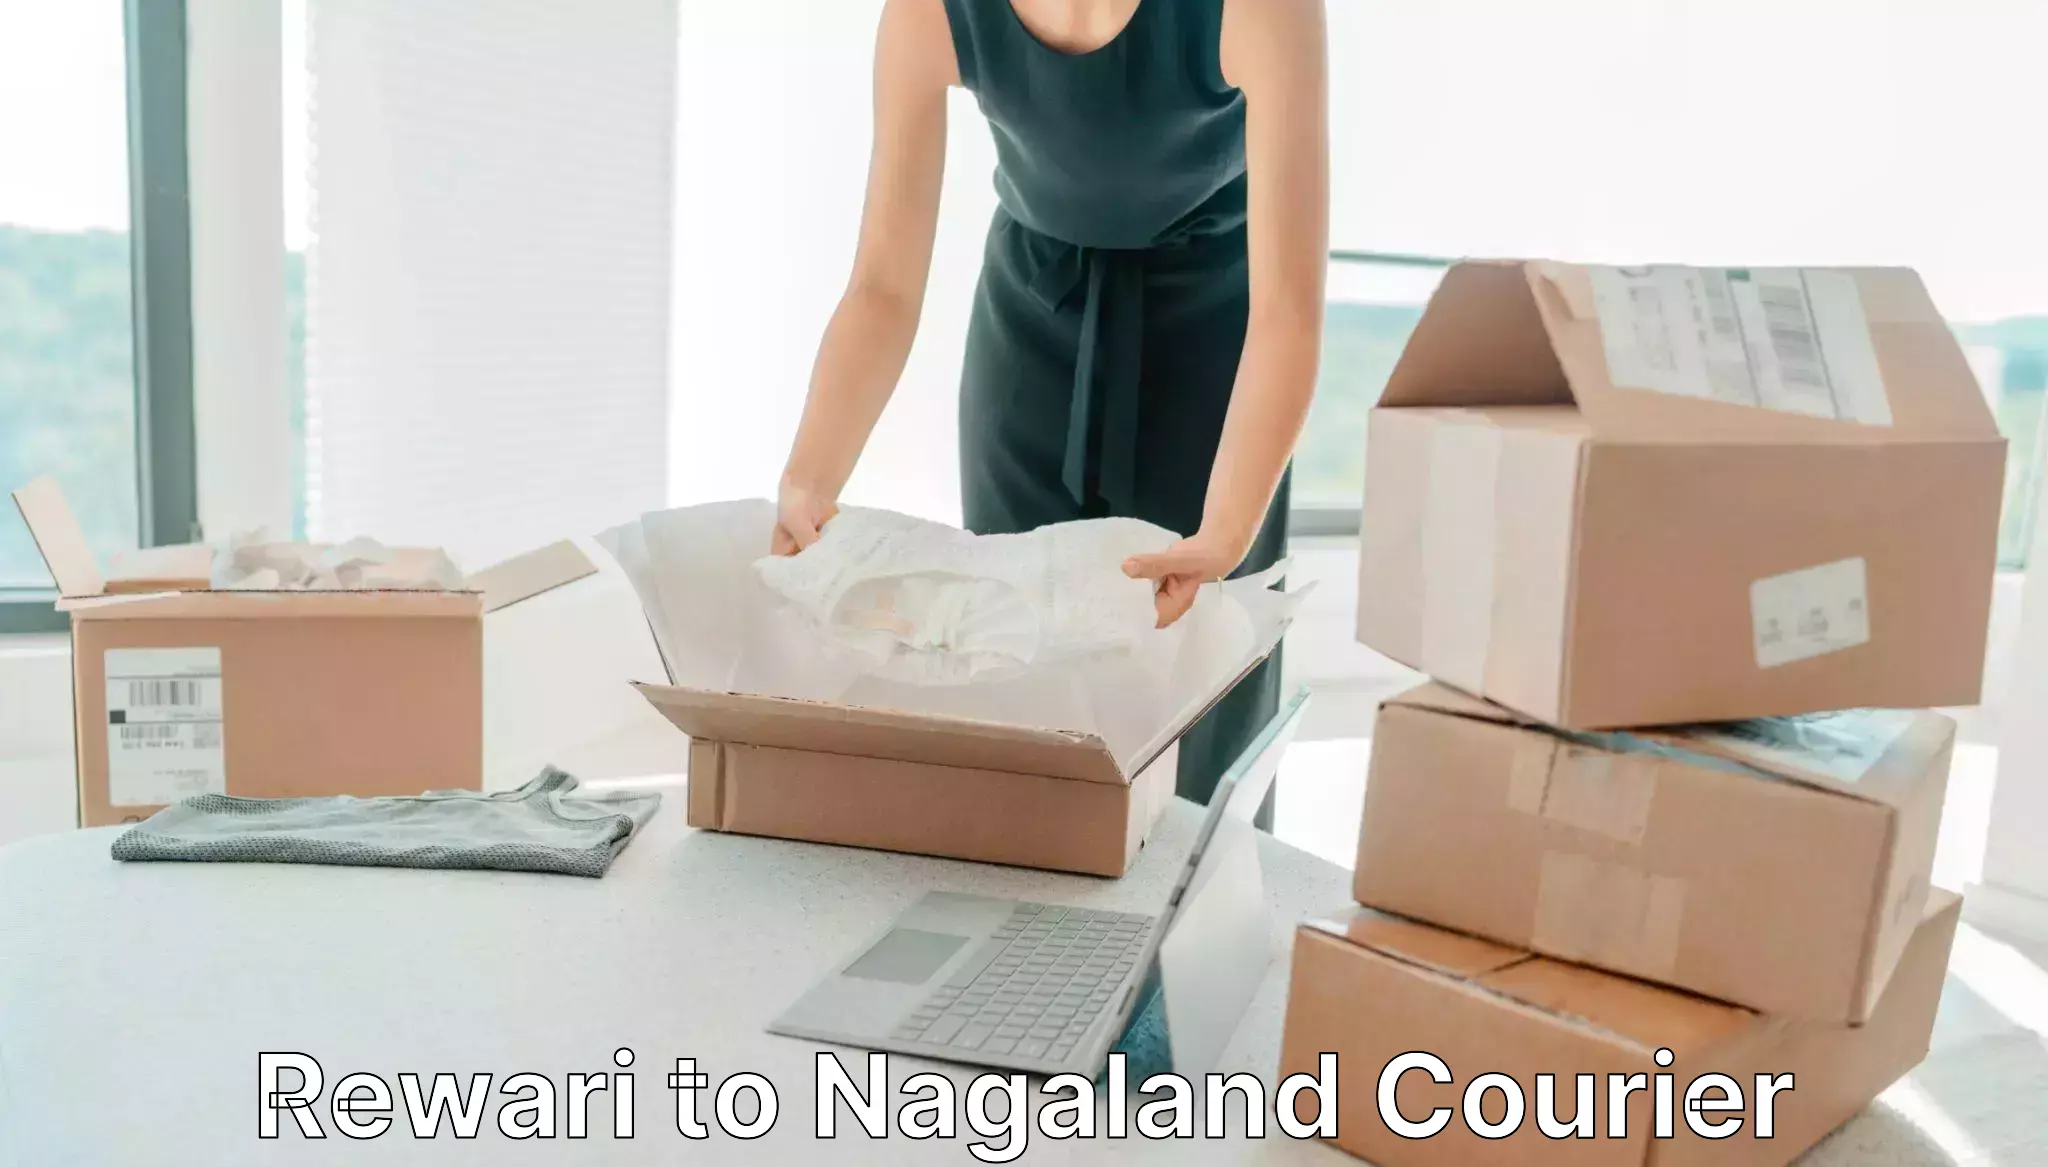 Expedited shipping methods Rewari to Nagaland